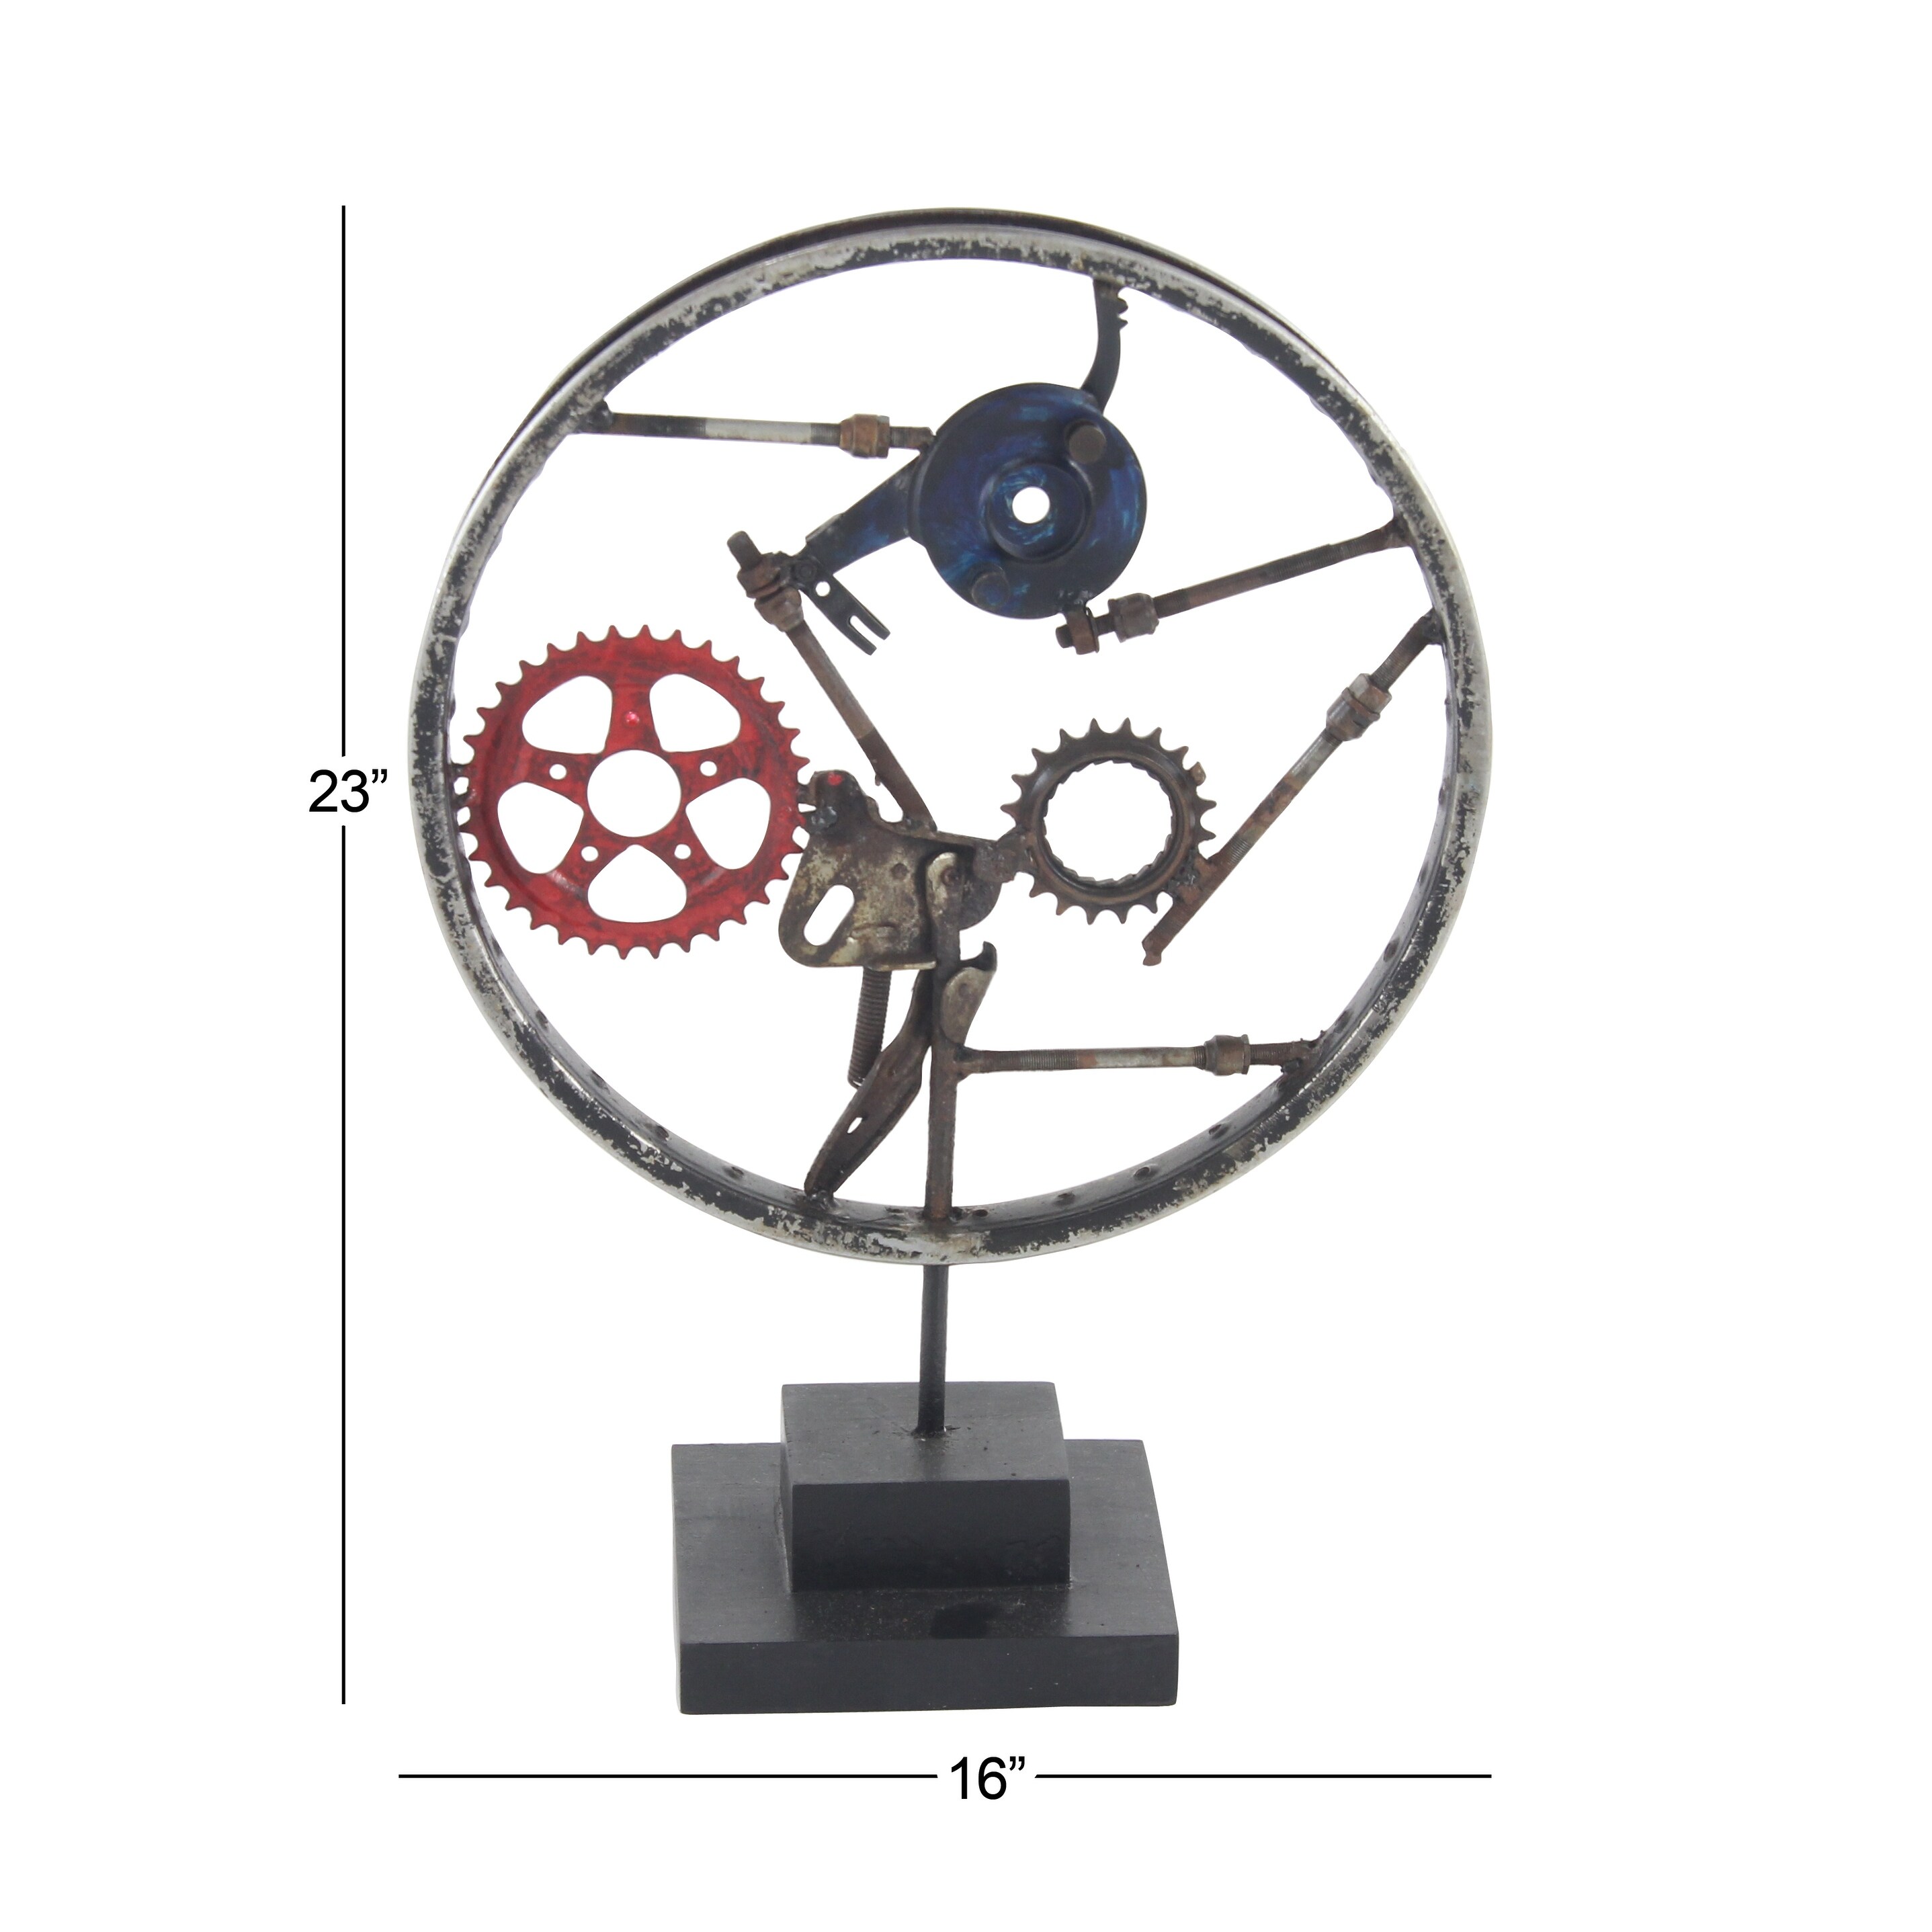 Grey Iron Industrial Sculpture Wheel 23 x 16 x 8 - 16 x 8 x 23